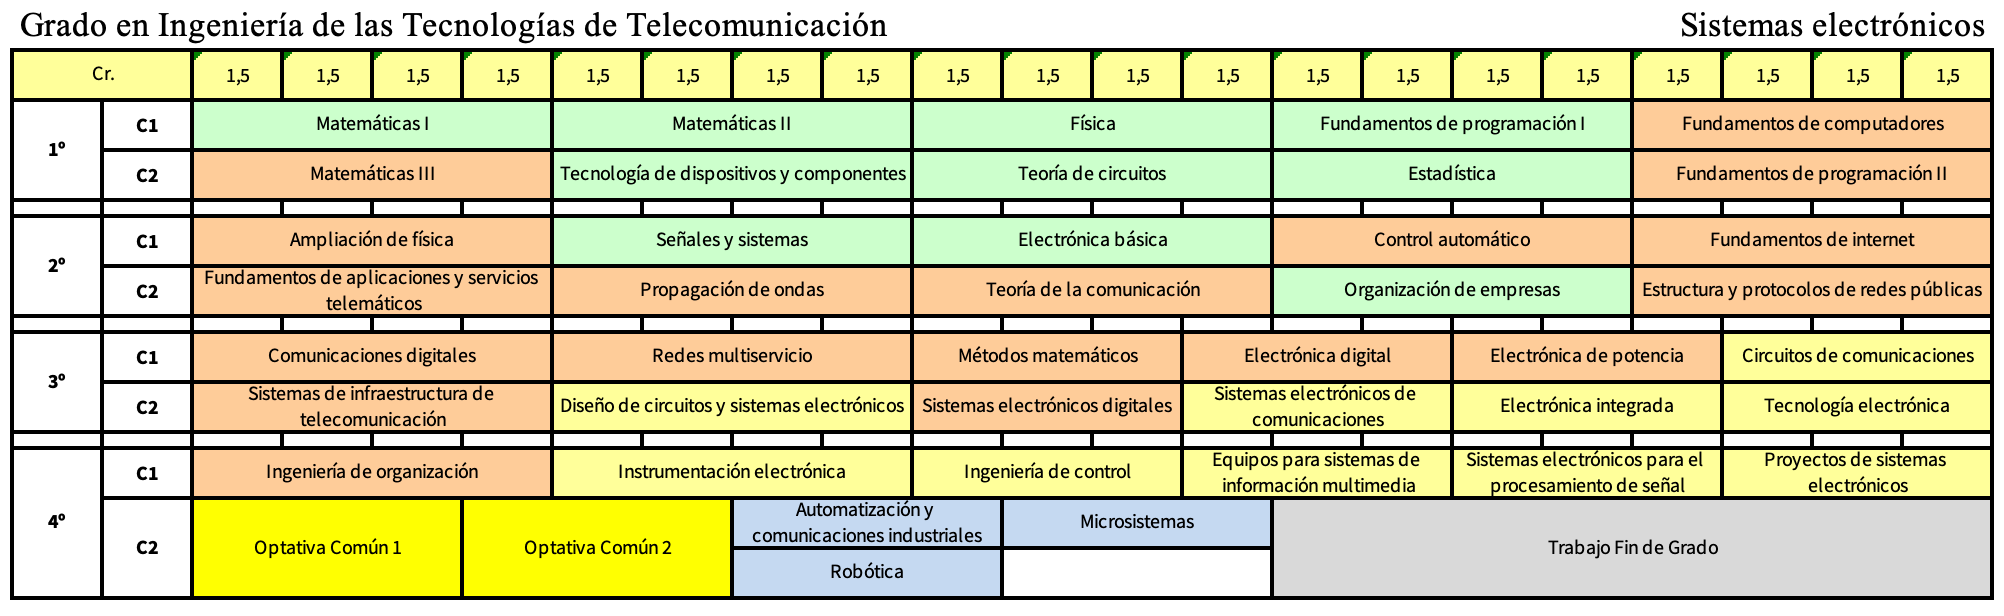 Grado en Ingeniería de las tecnologías de Telecomunicación - Mención en Sistemas Electrónicos  | Etsi